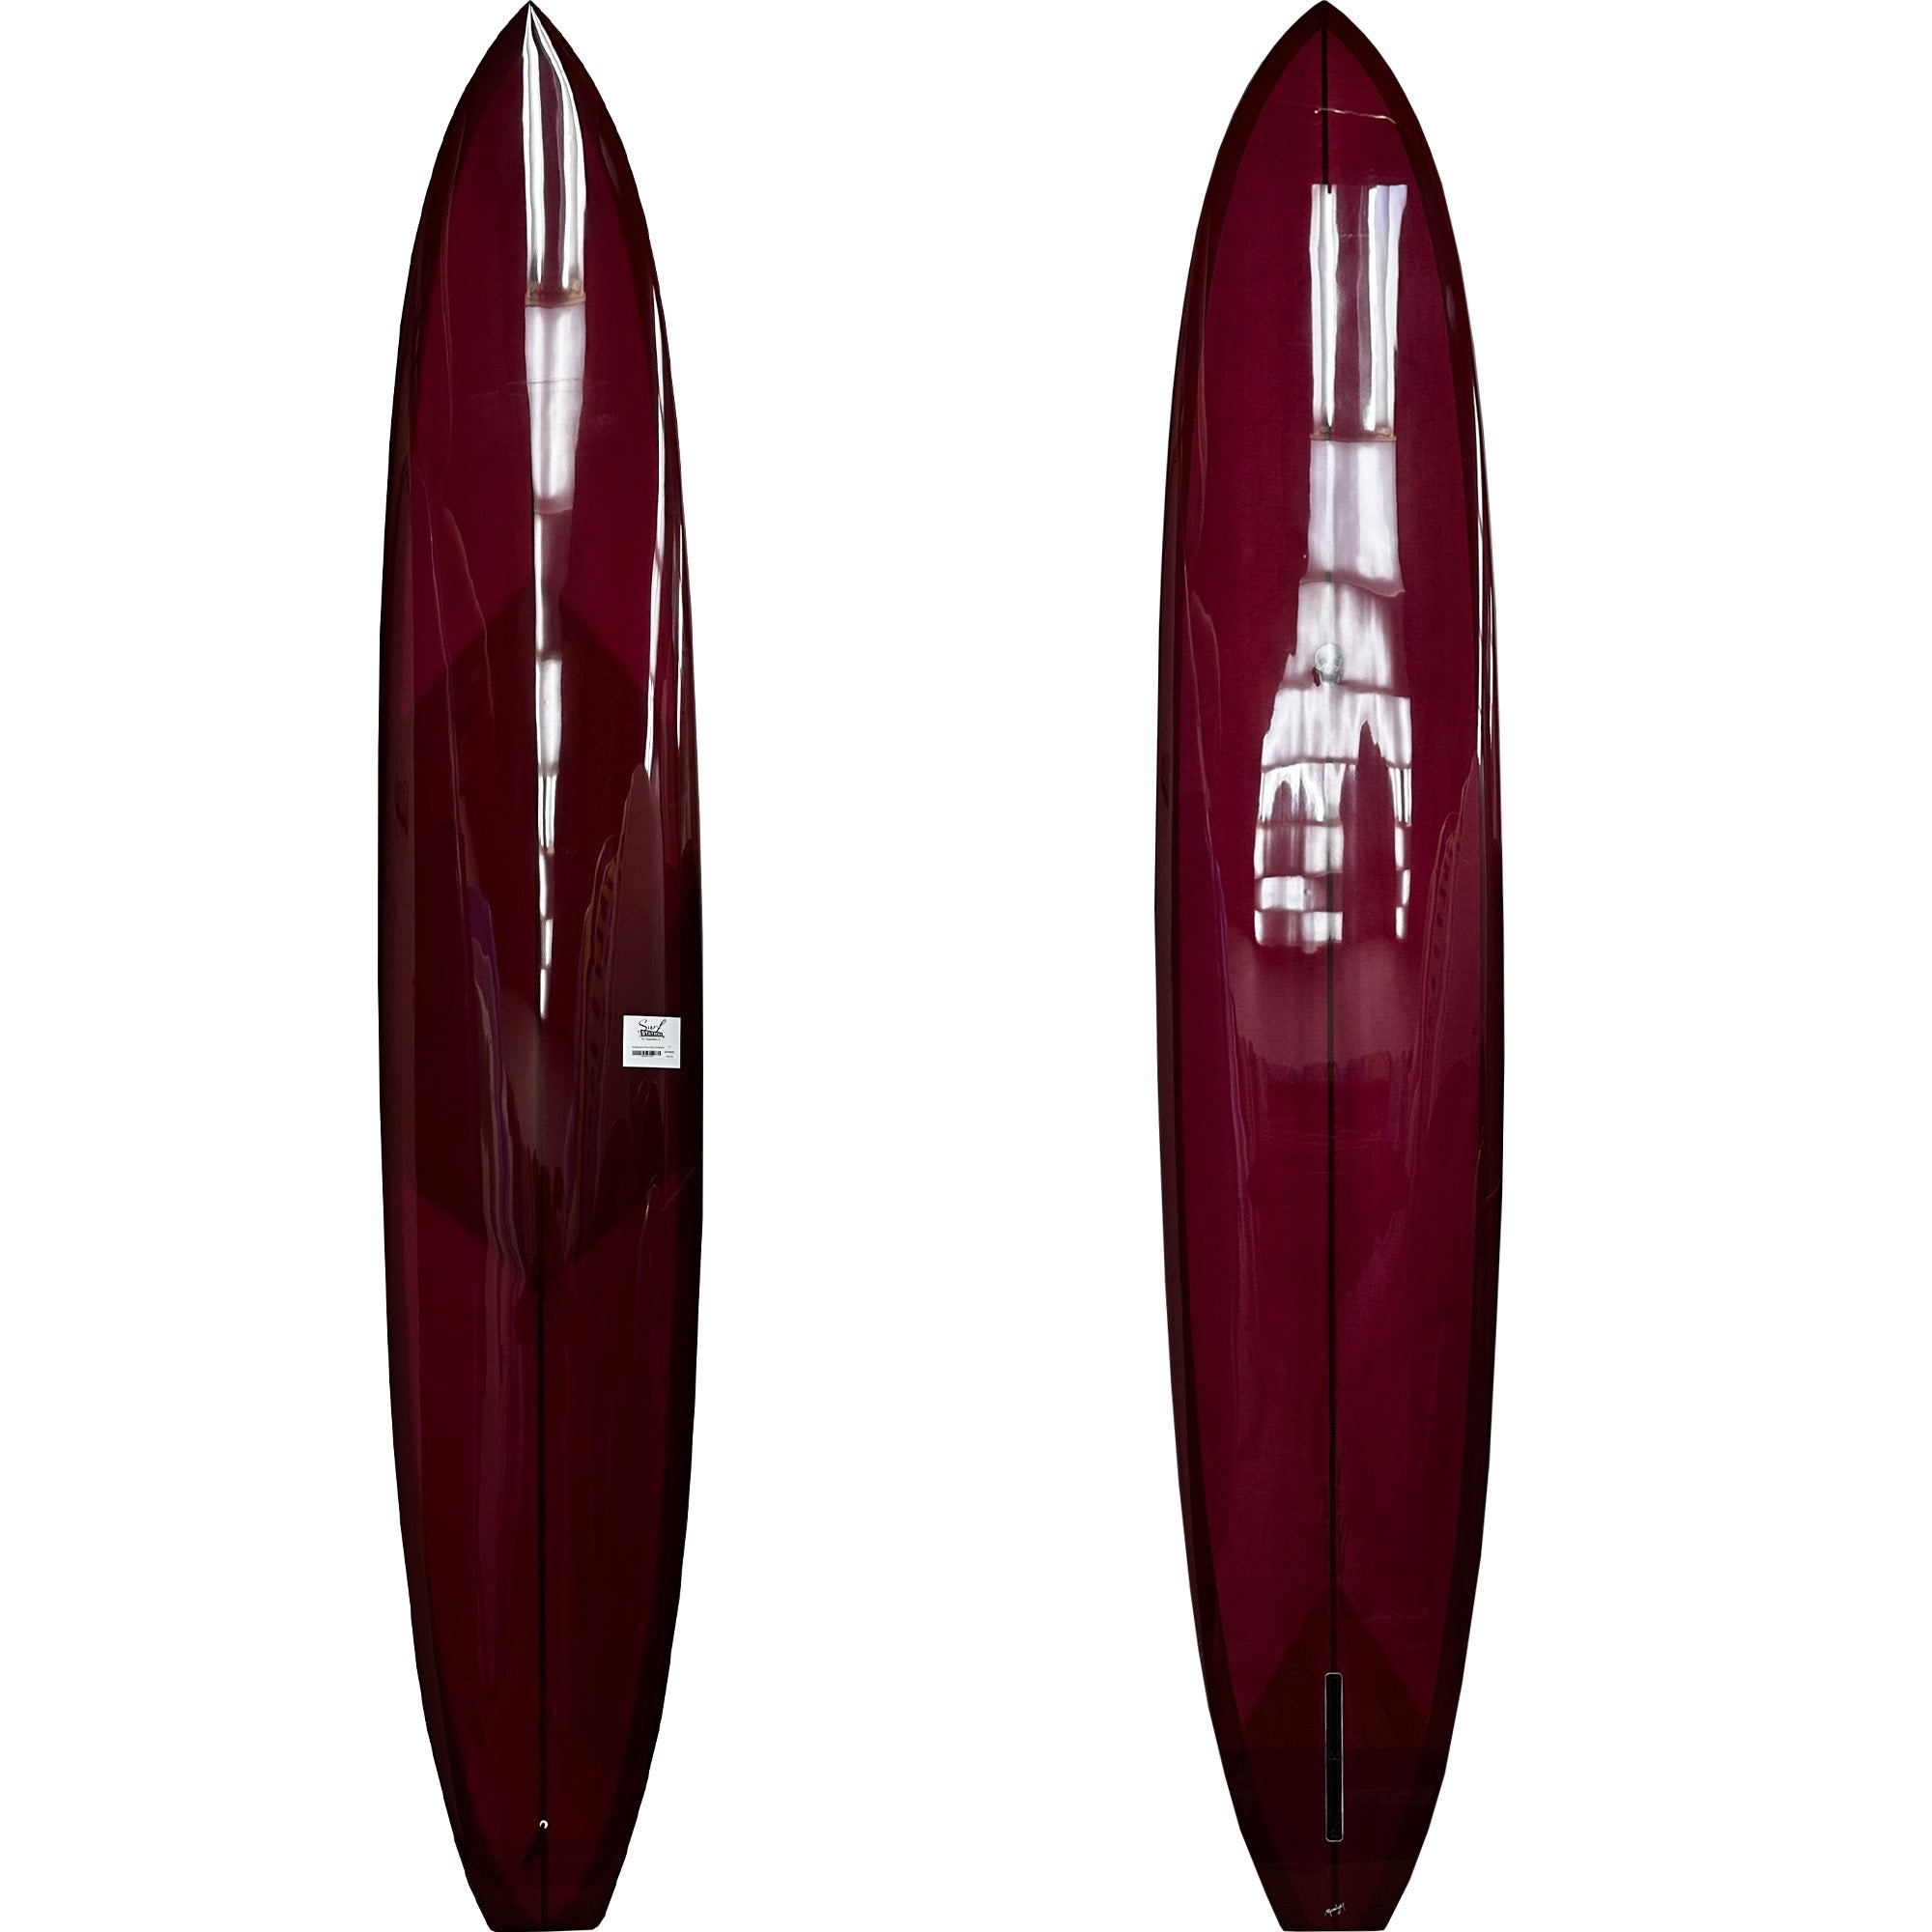 Christenson Chris Craft Surfboard